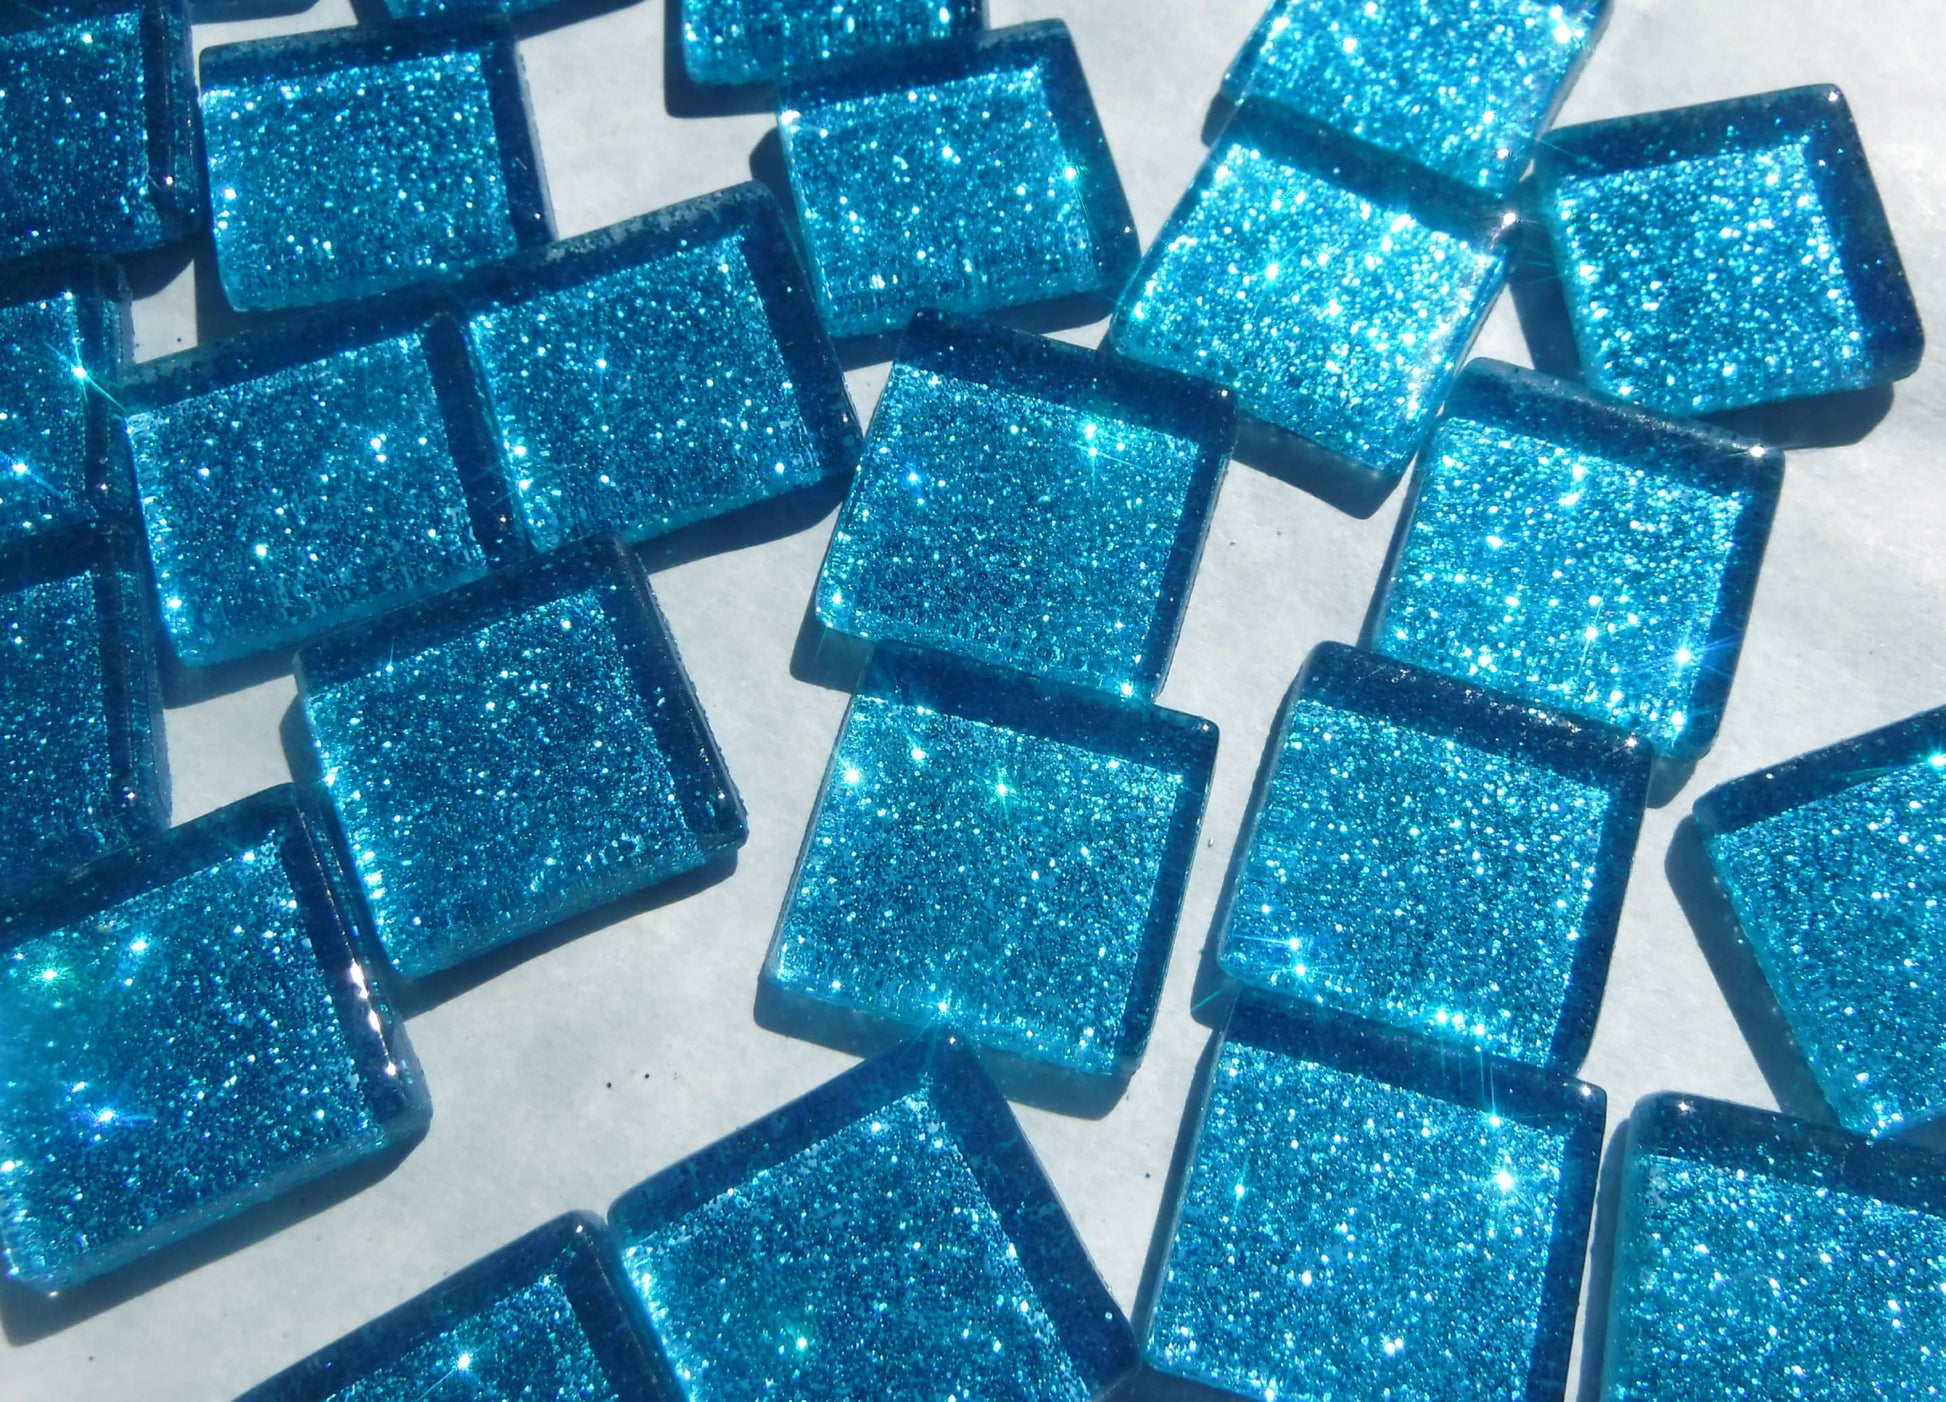 Sky Blue Glitter Tiles - 20mm Mosaic Tiles - 25 Metallic Glass Tiles in Medium Blue